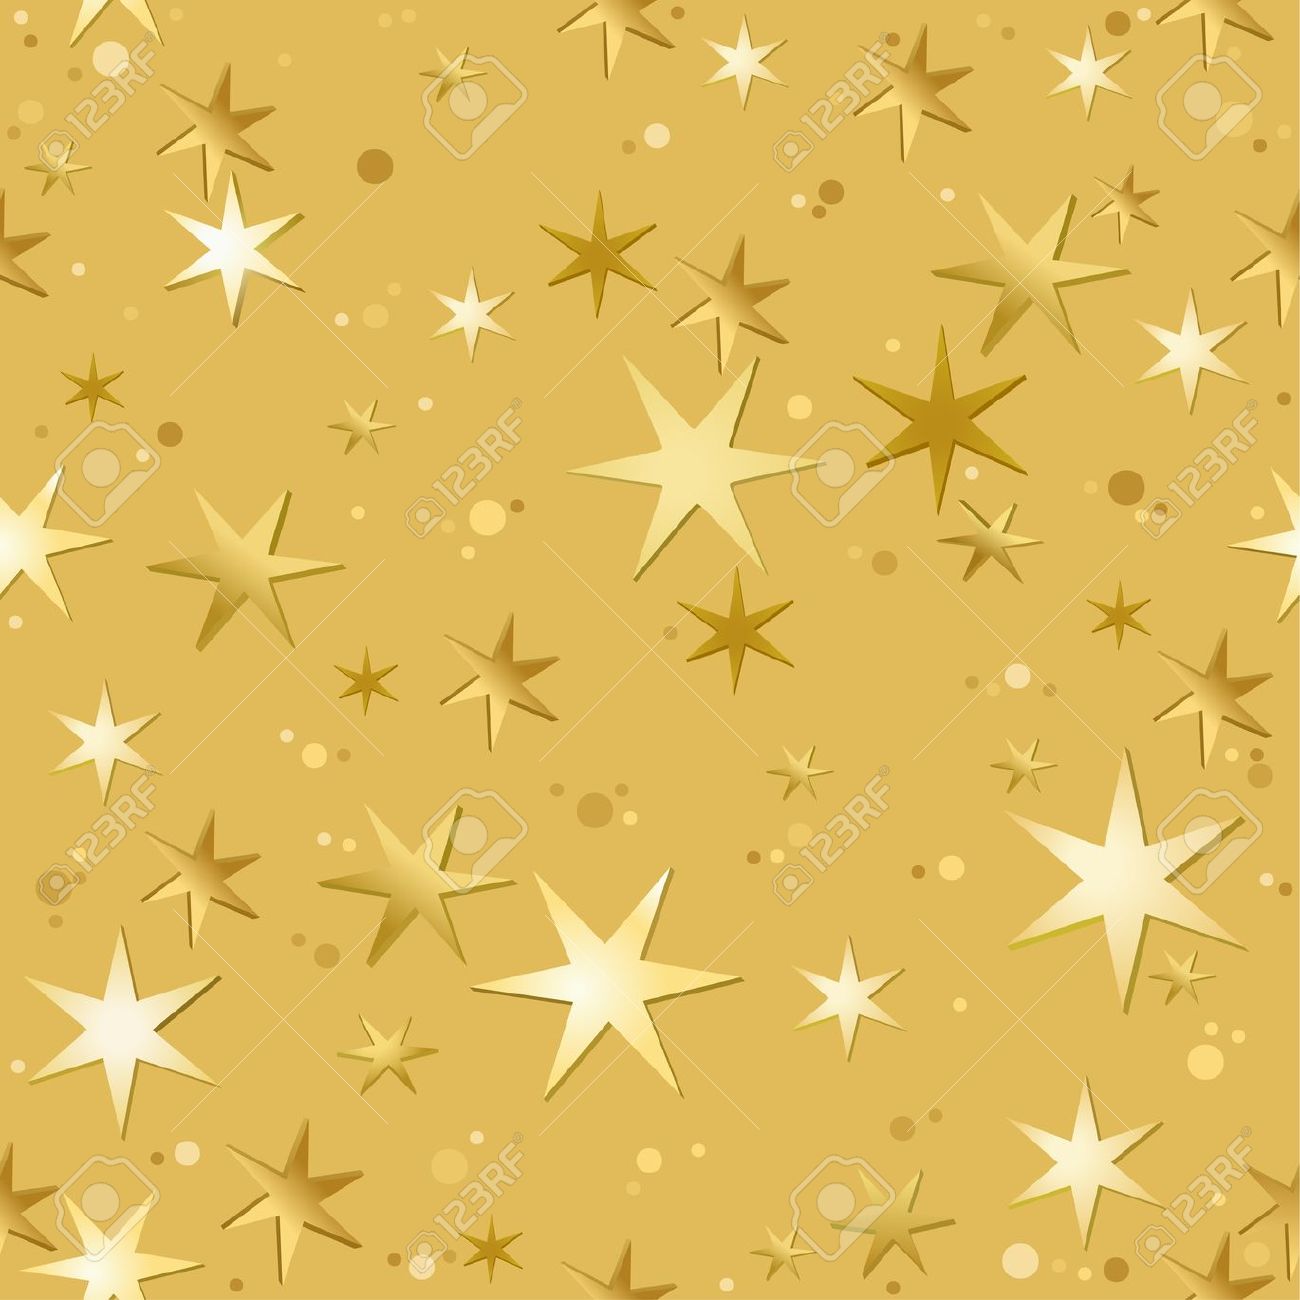 free clipart stars background - photo #11